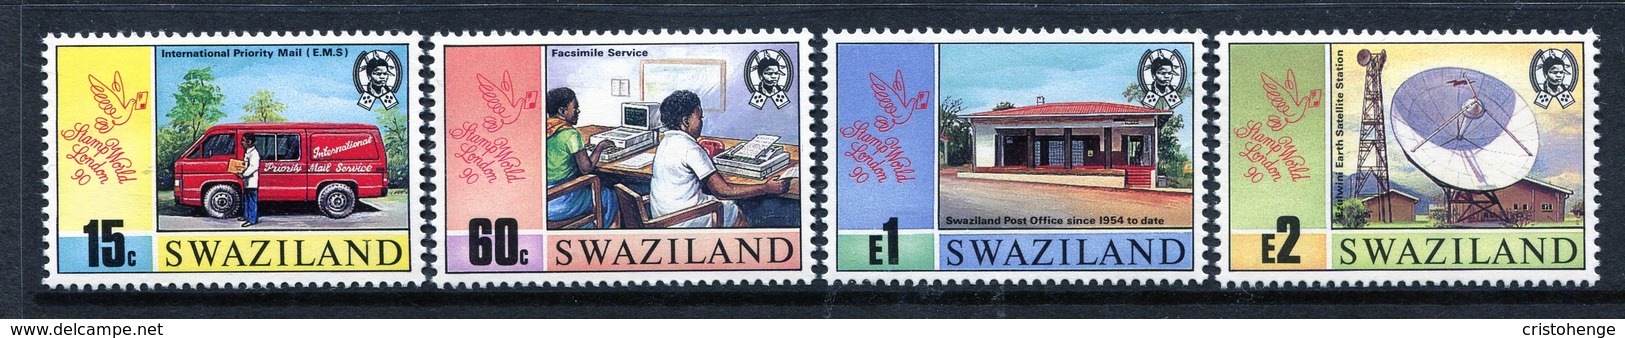 Swaziland 1990 Stamp World London '90 Set MNH (SG 565-568) - Swaziland (1968-...)